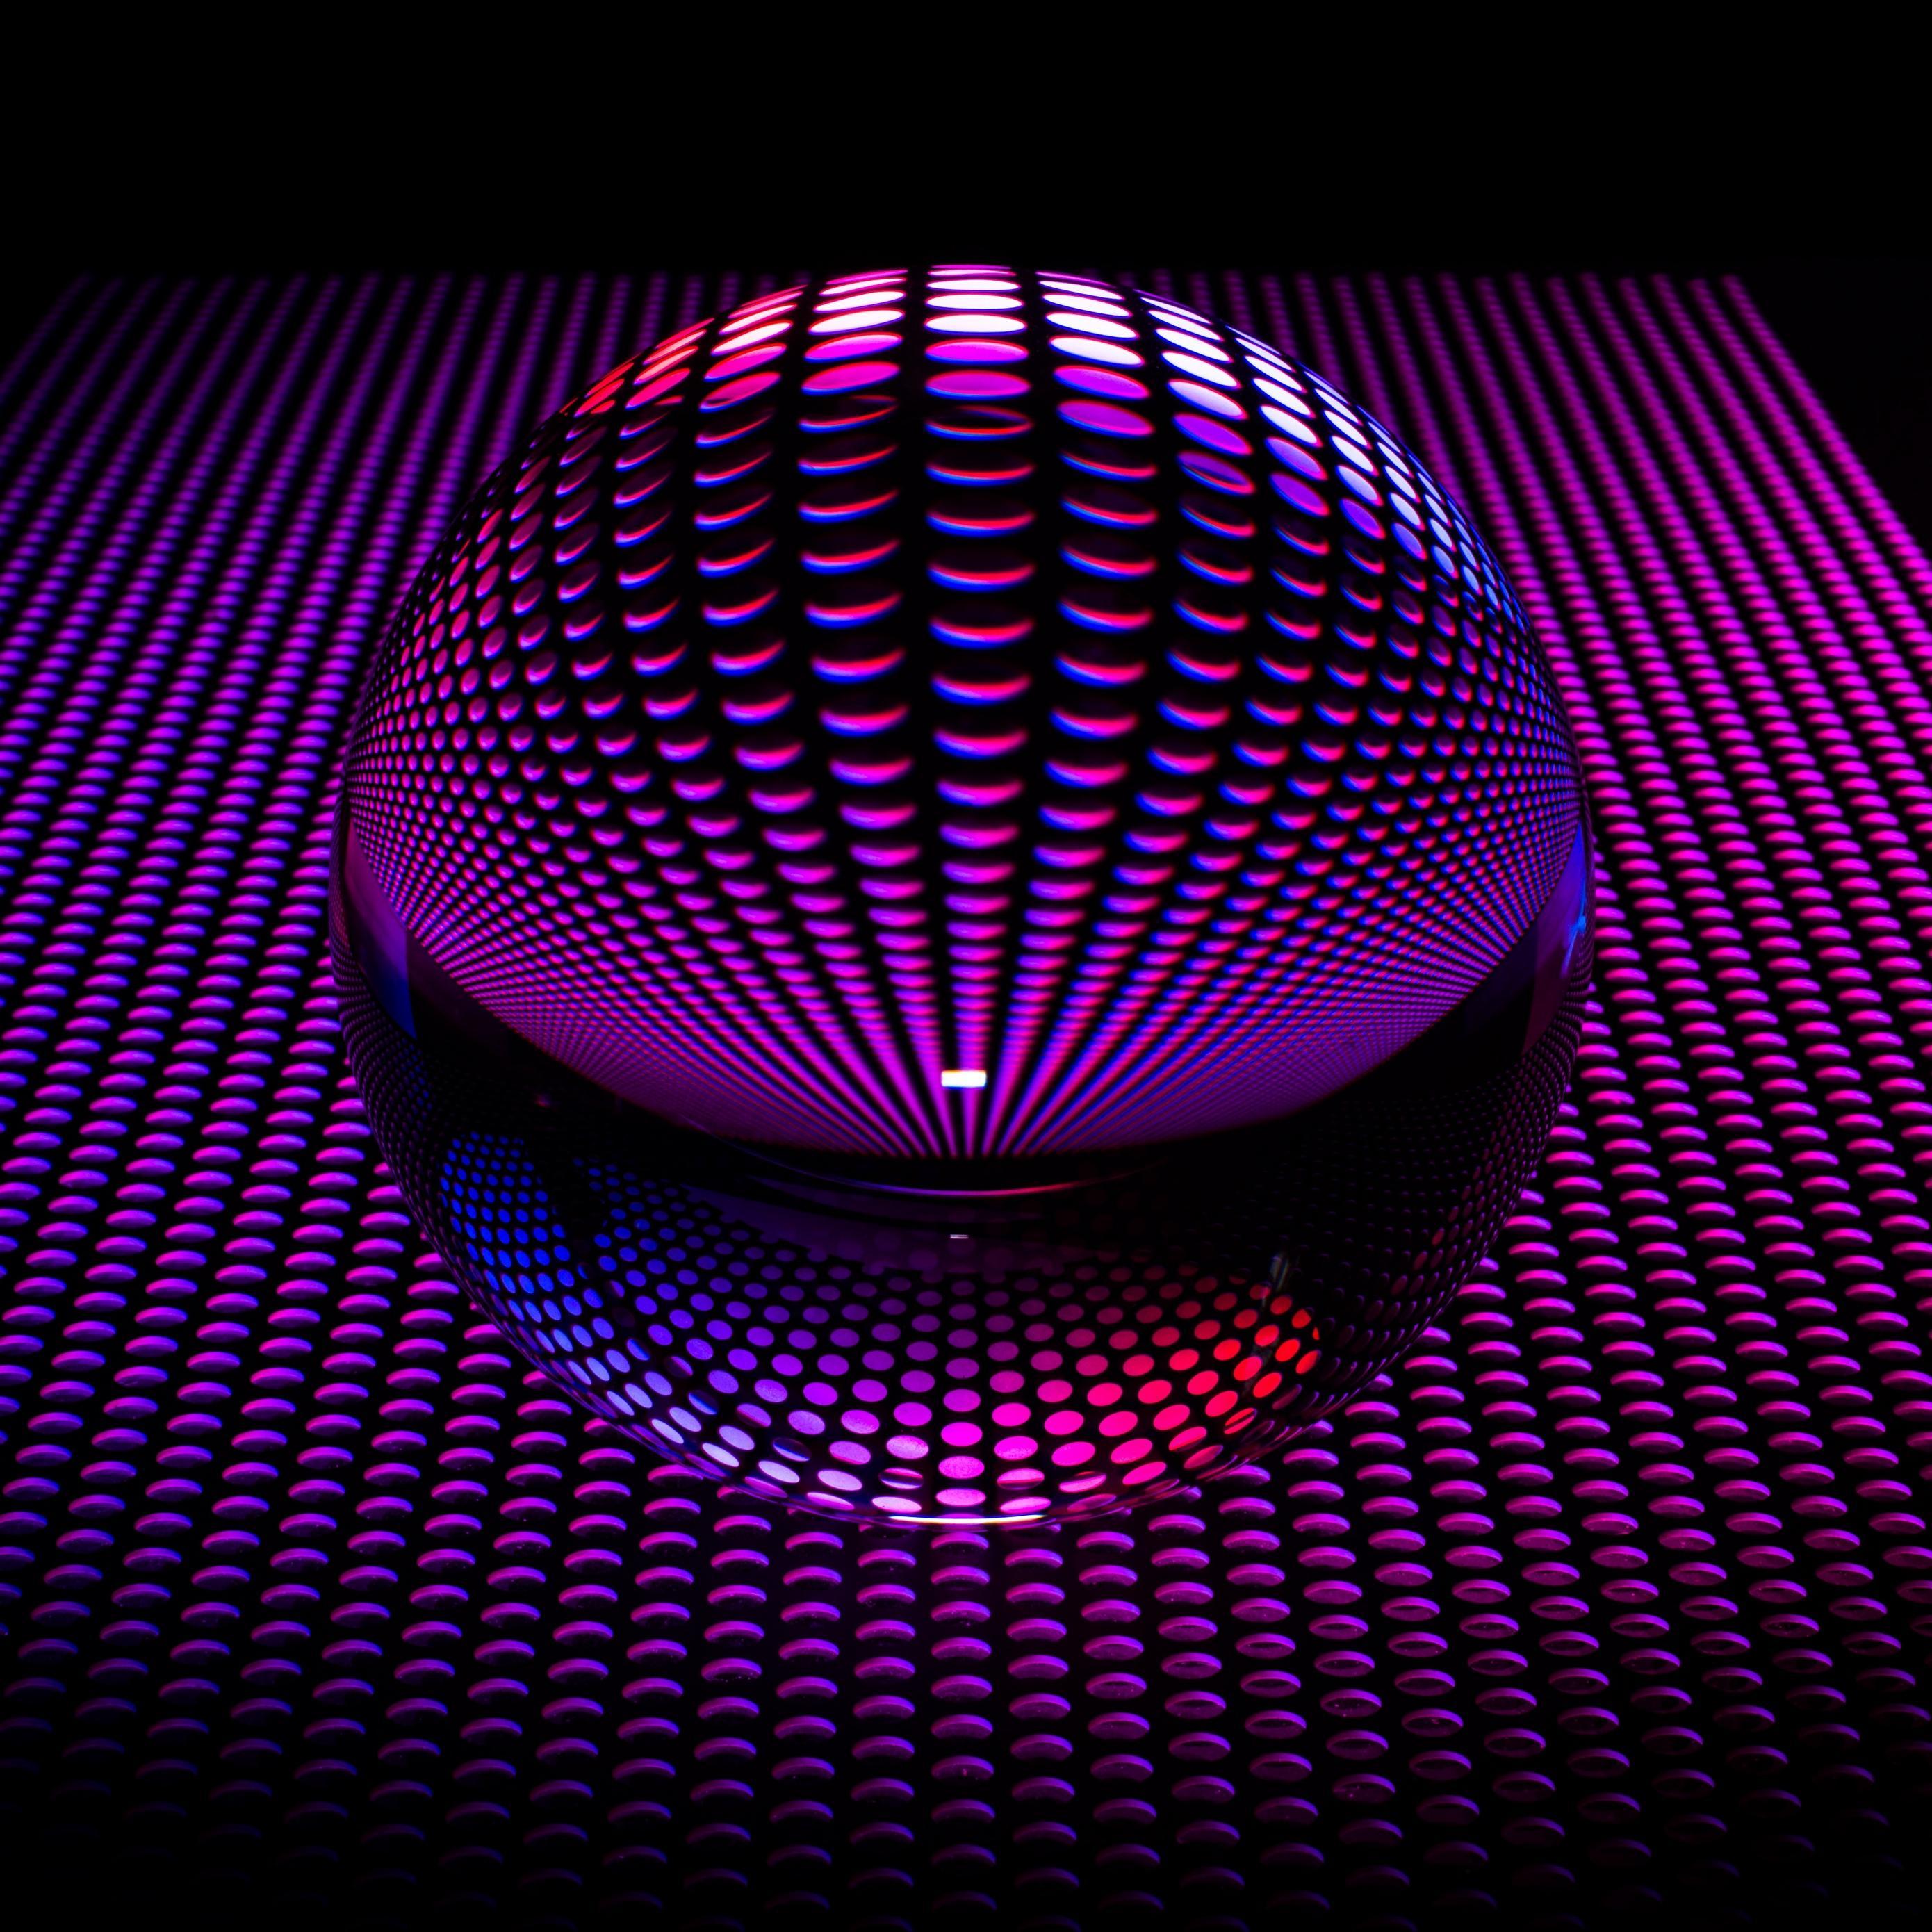 Download wallpaper 2780x2780 ball, sphere, circles, shape ipad air